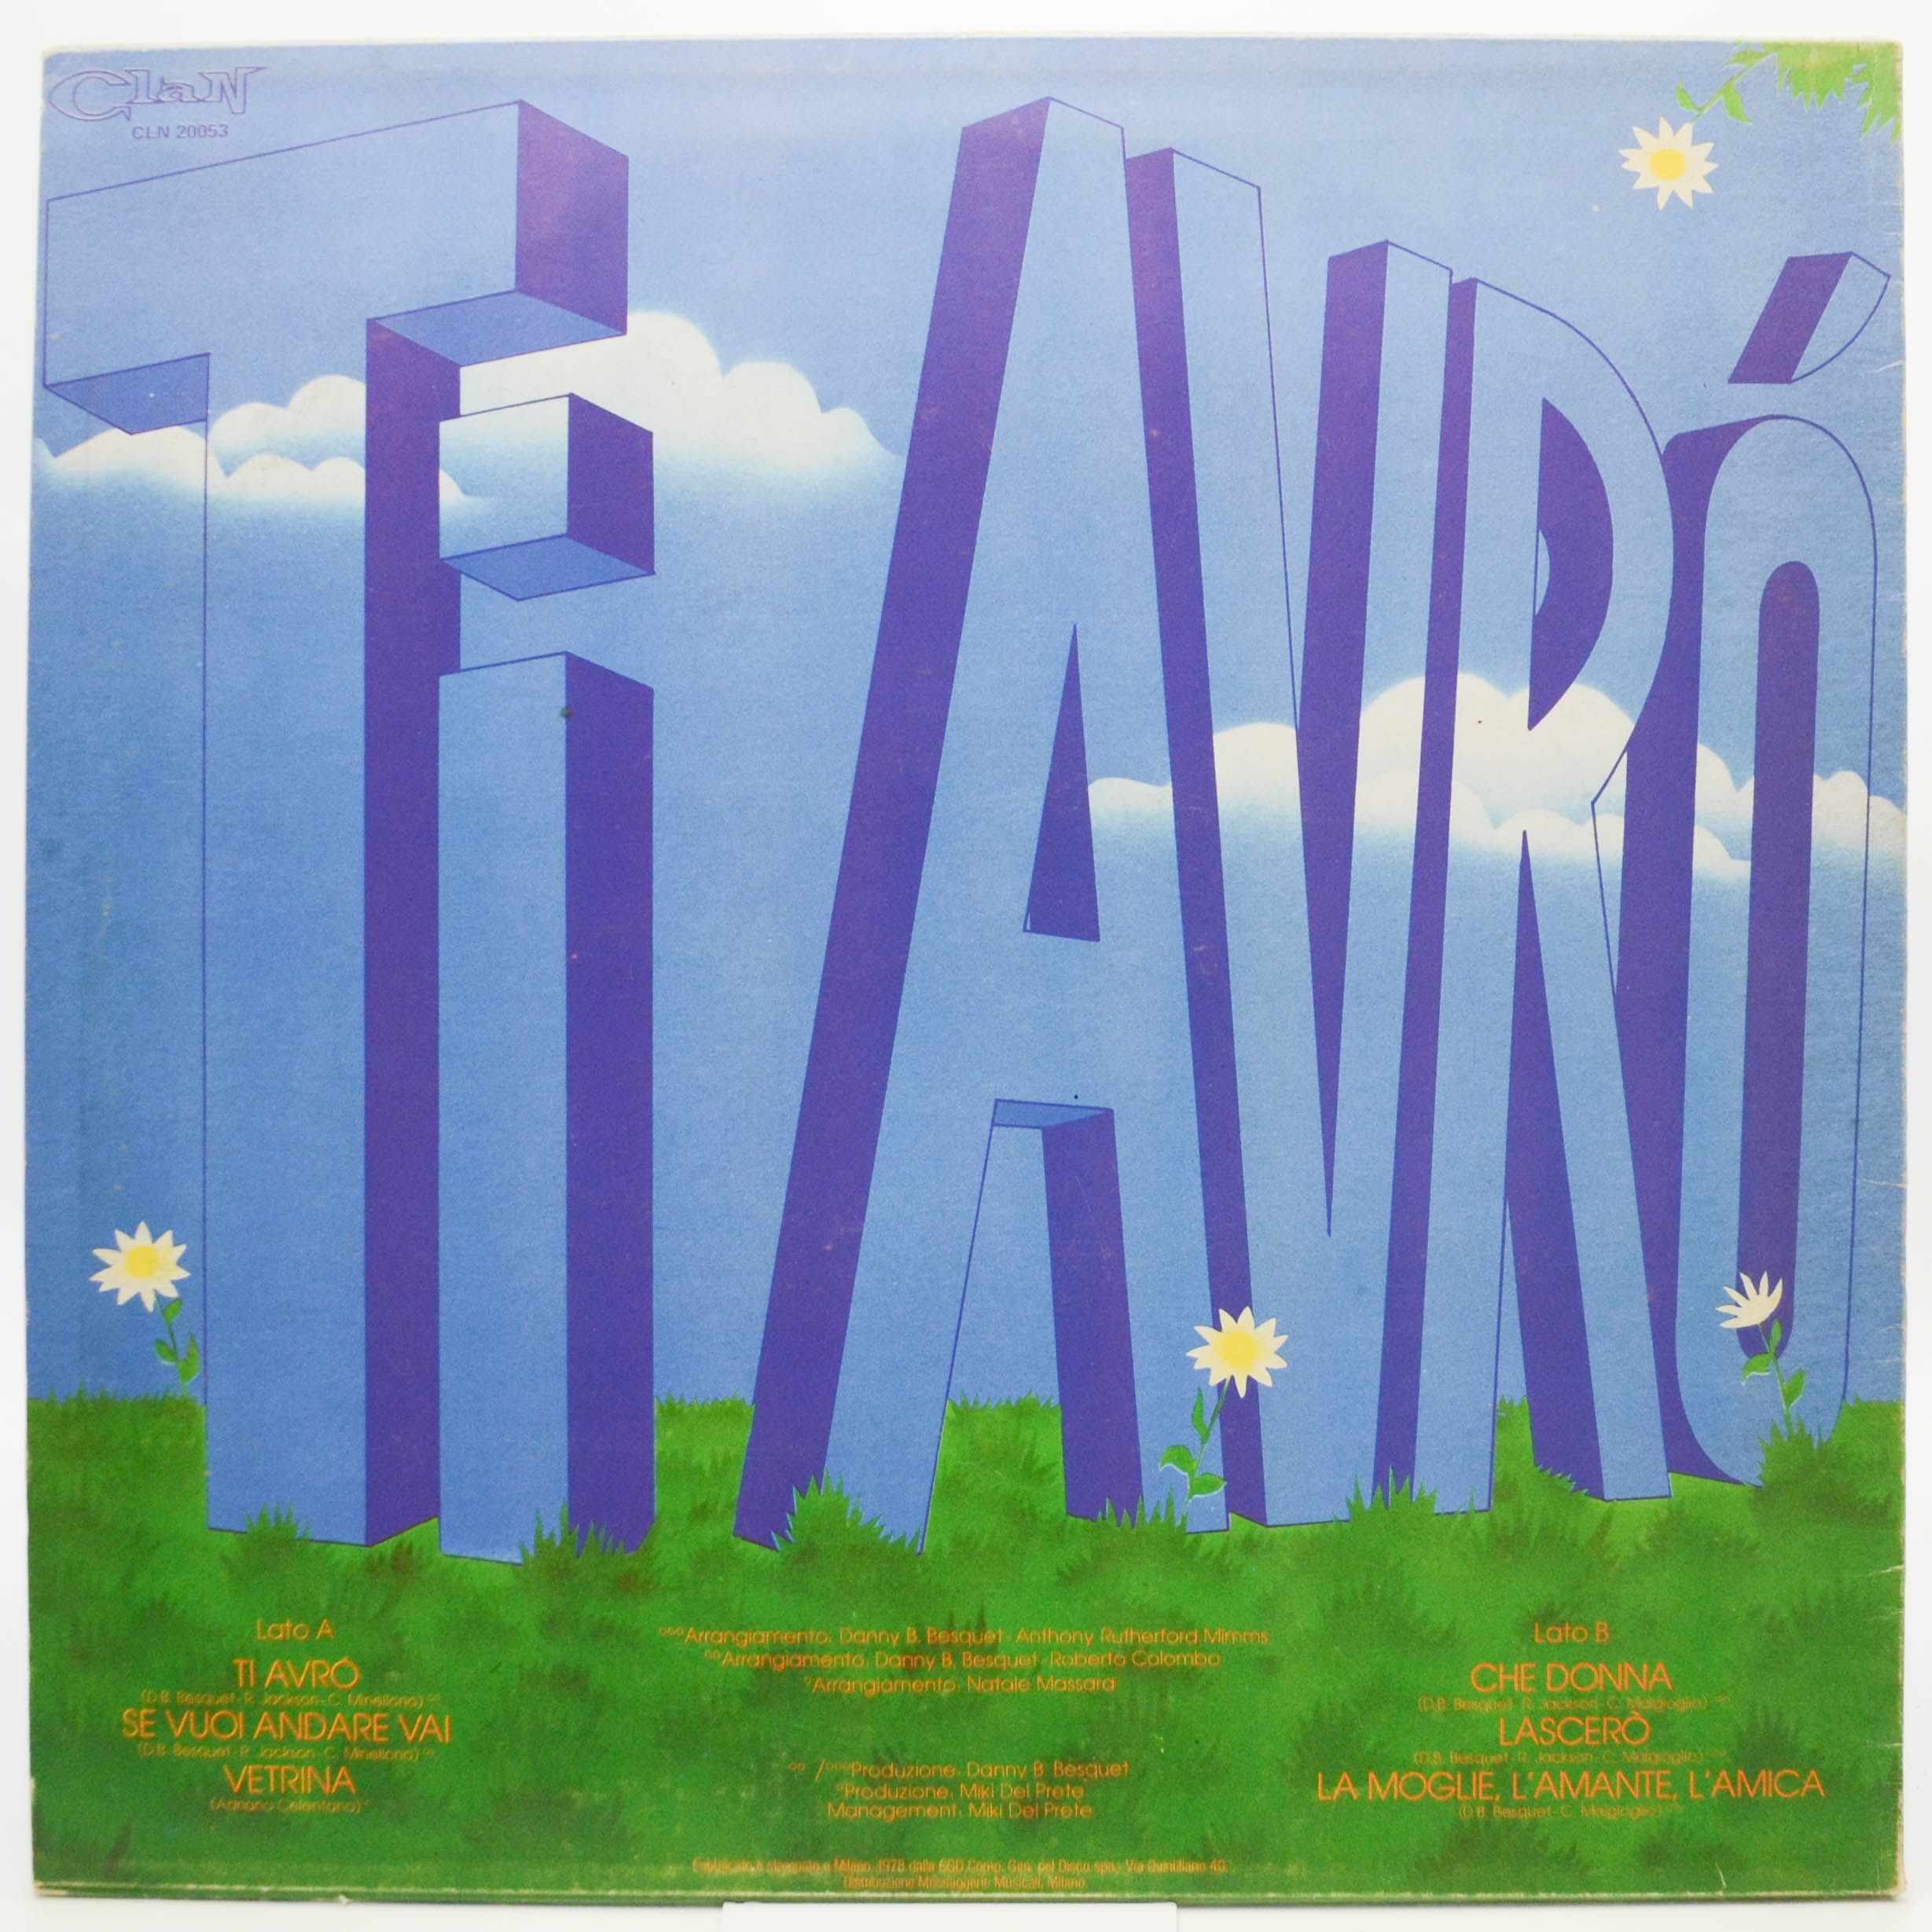 Adriano Celentano — Ti Avrò (1-st, Italy, Clan), 1978